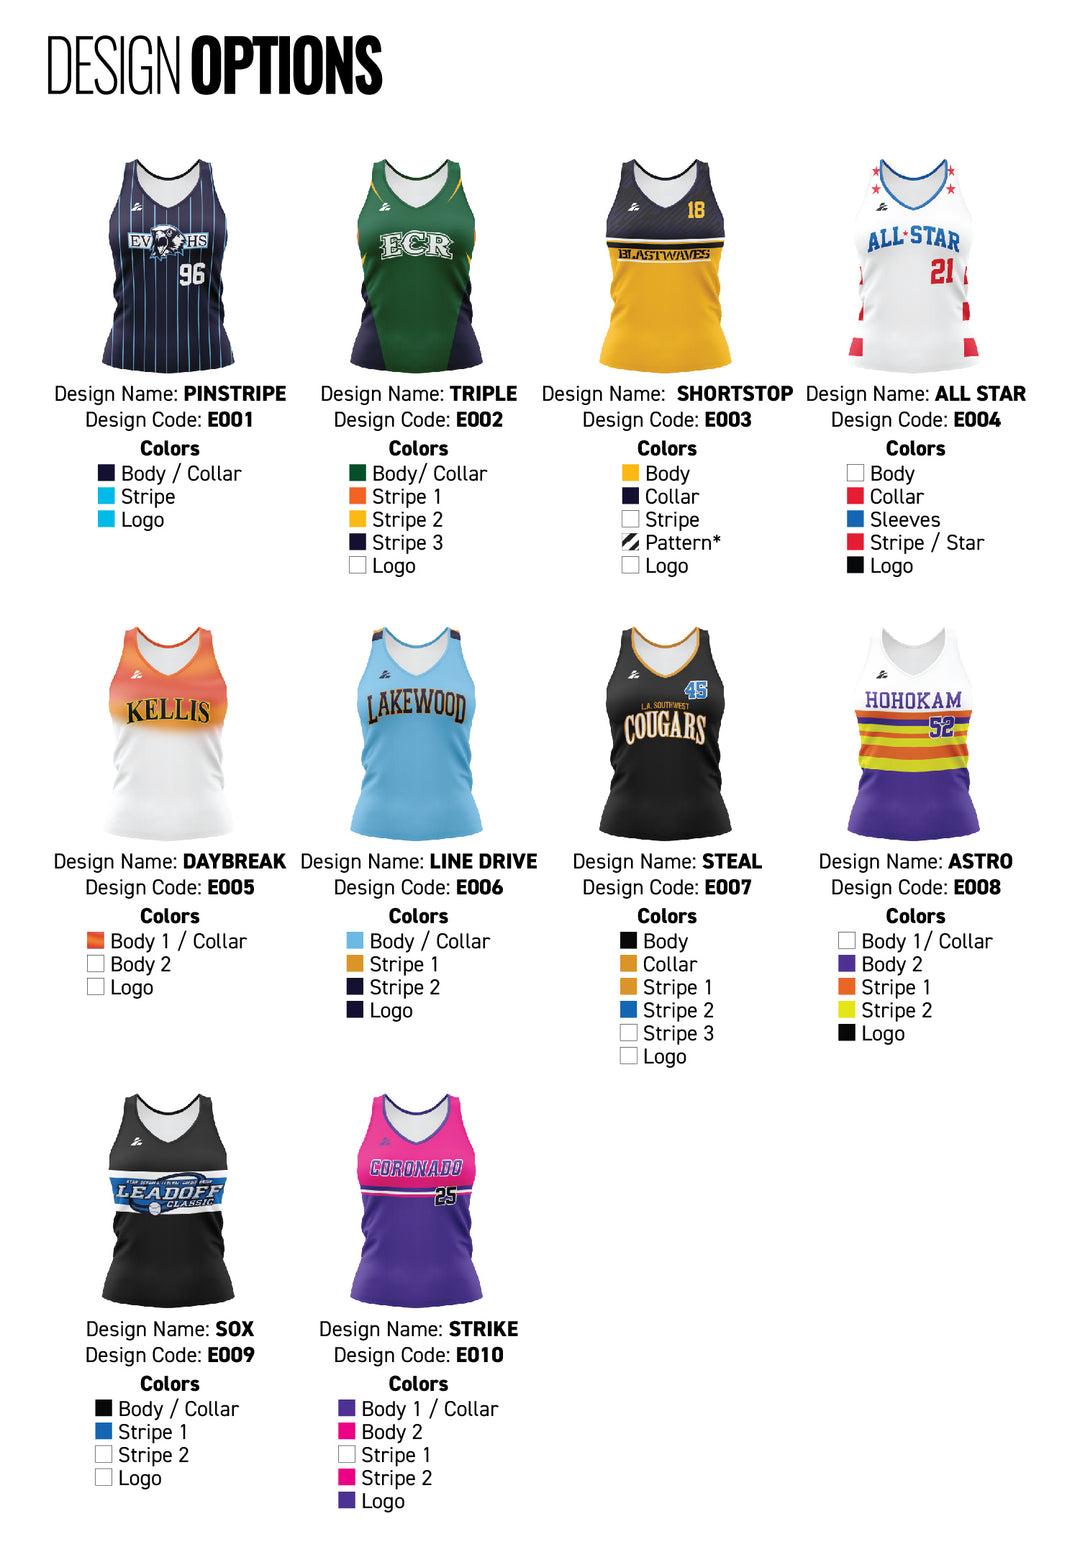 Women's & Girl's Sleeveless Racerback Softball Jersey by Labfit